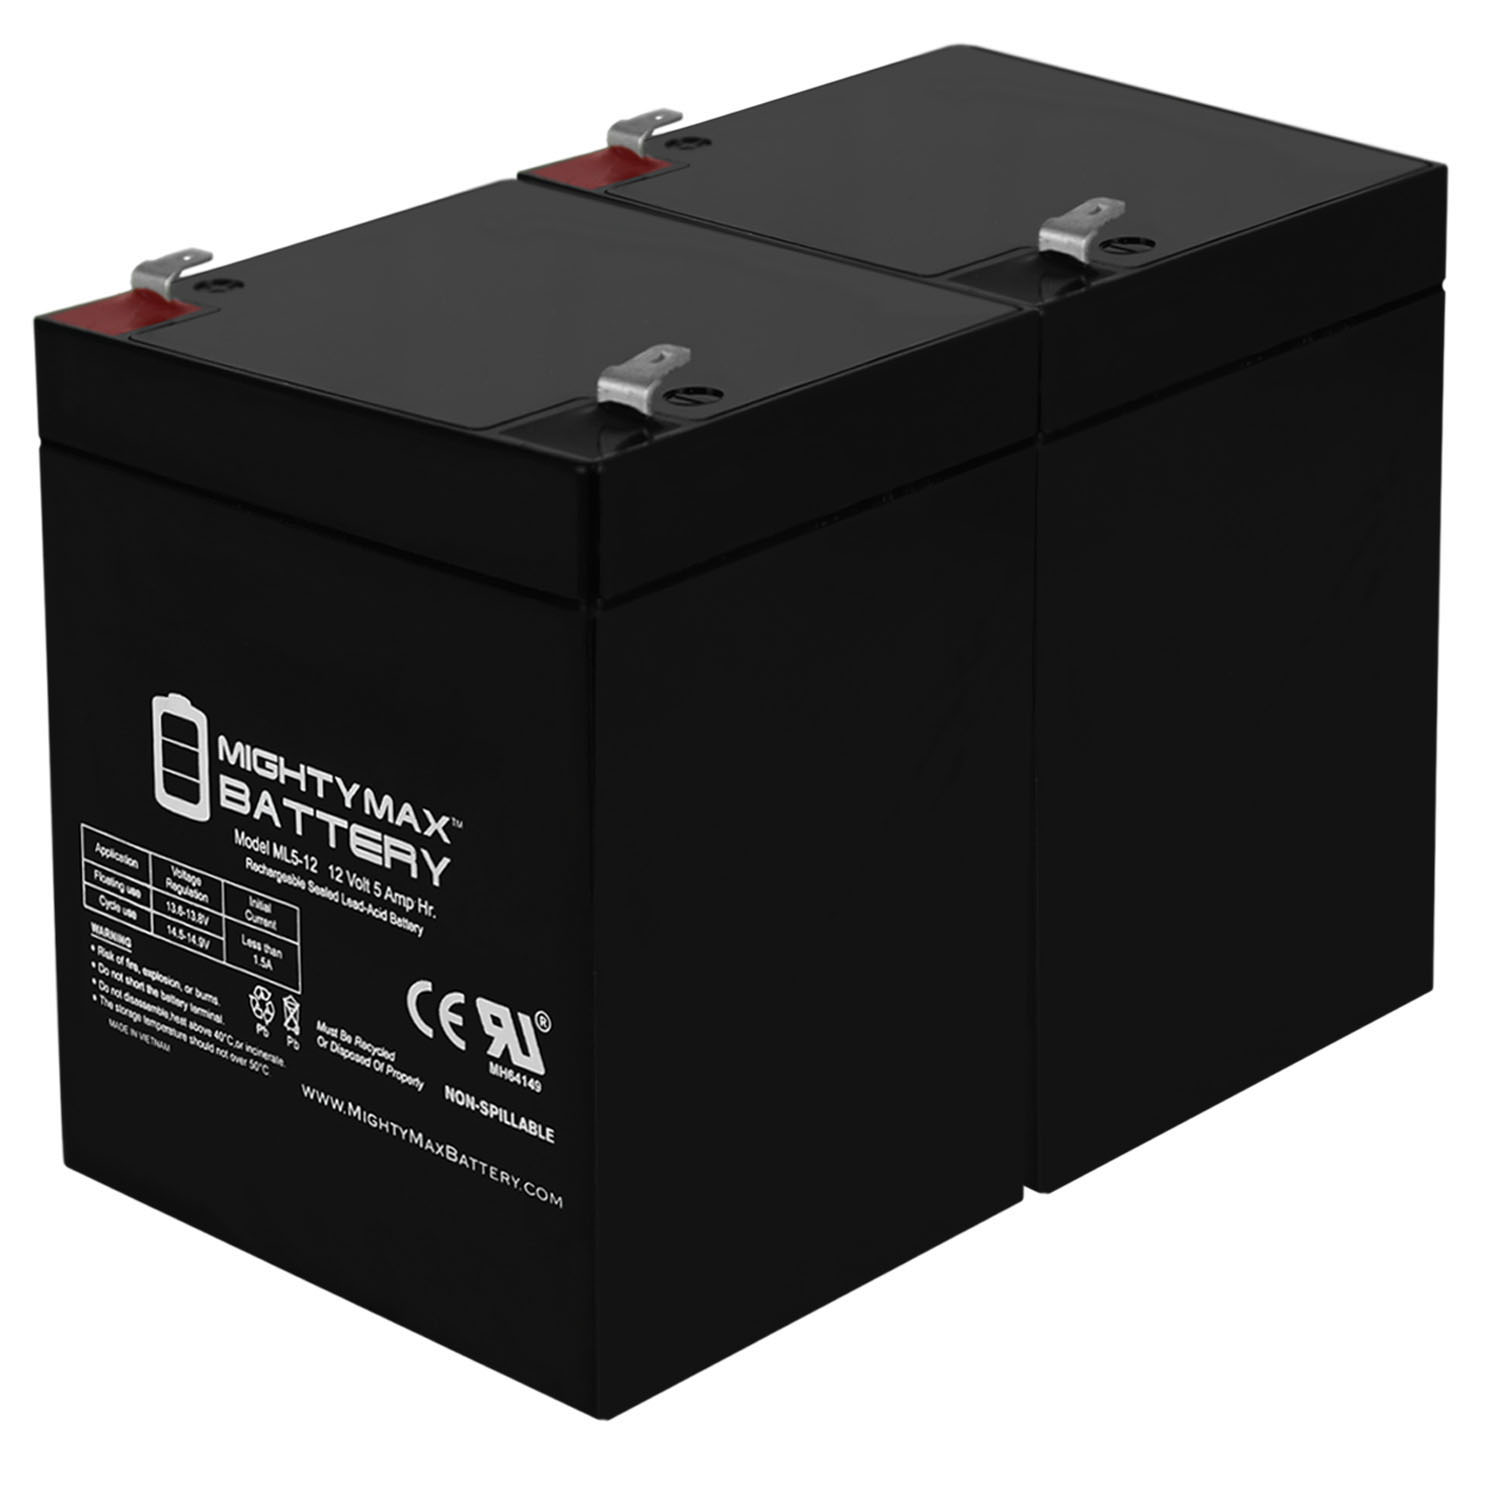 12V 5AH SLA Replacement Battery for KMG-5-12 - 2 Pack